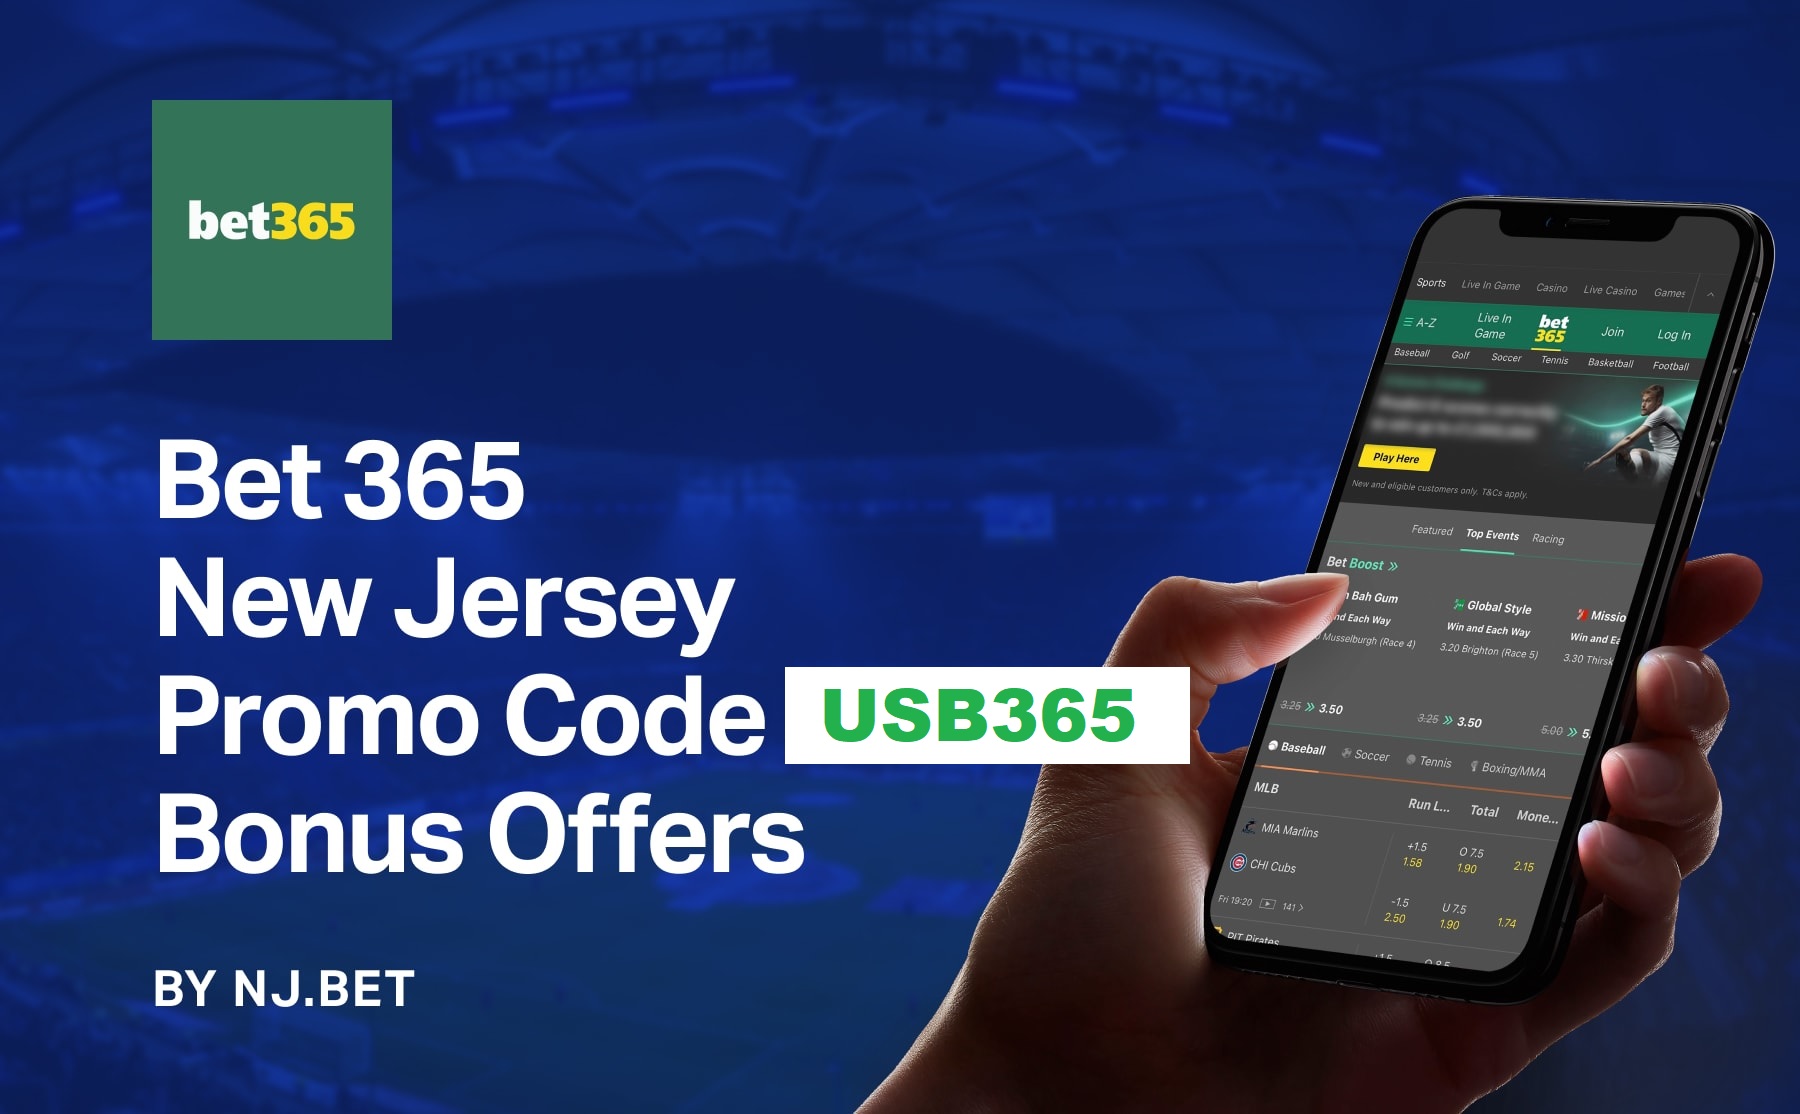 sign up bonus code for bet365 New Jersey